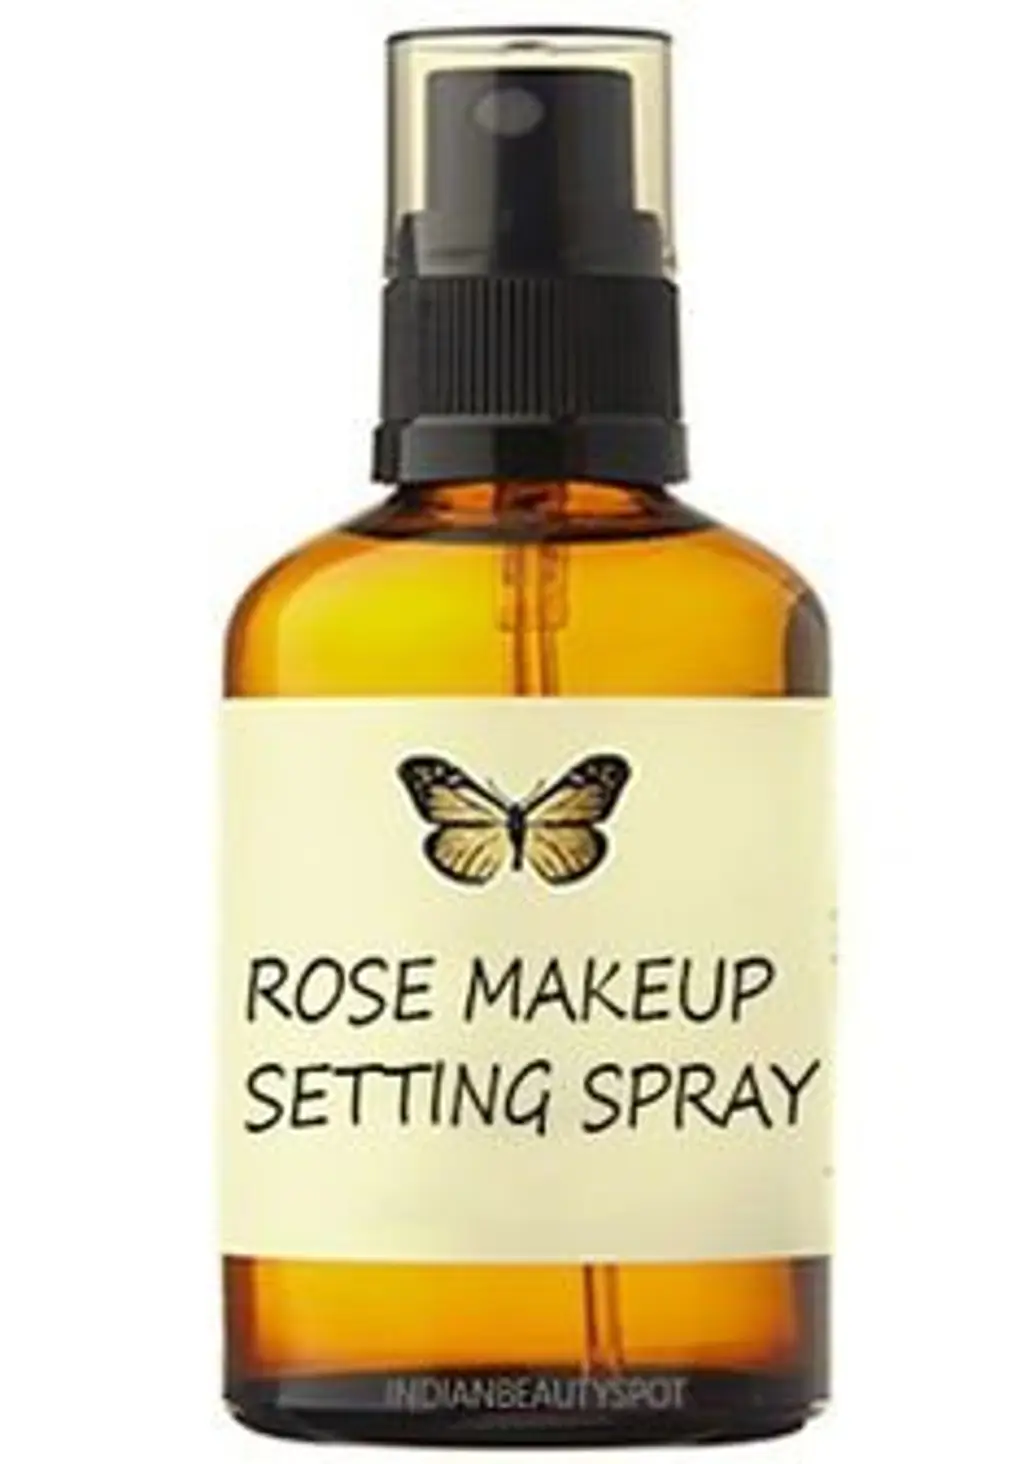 Rose Makeup Setting Spray